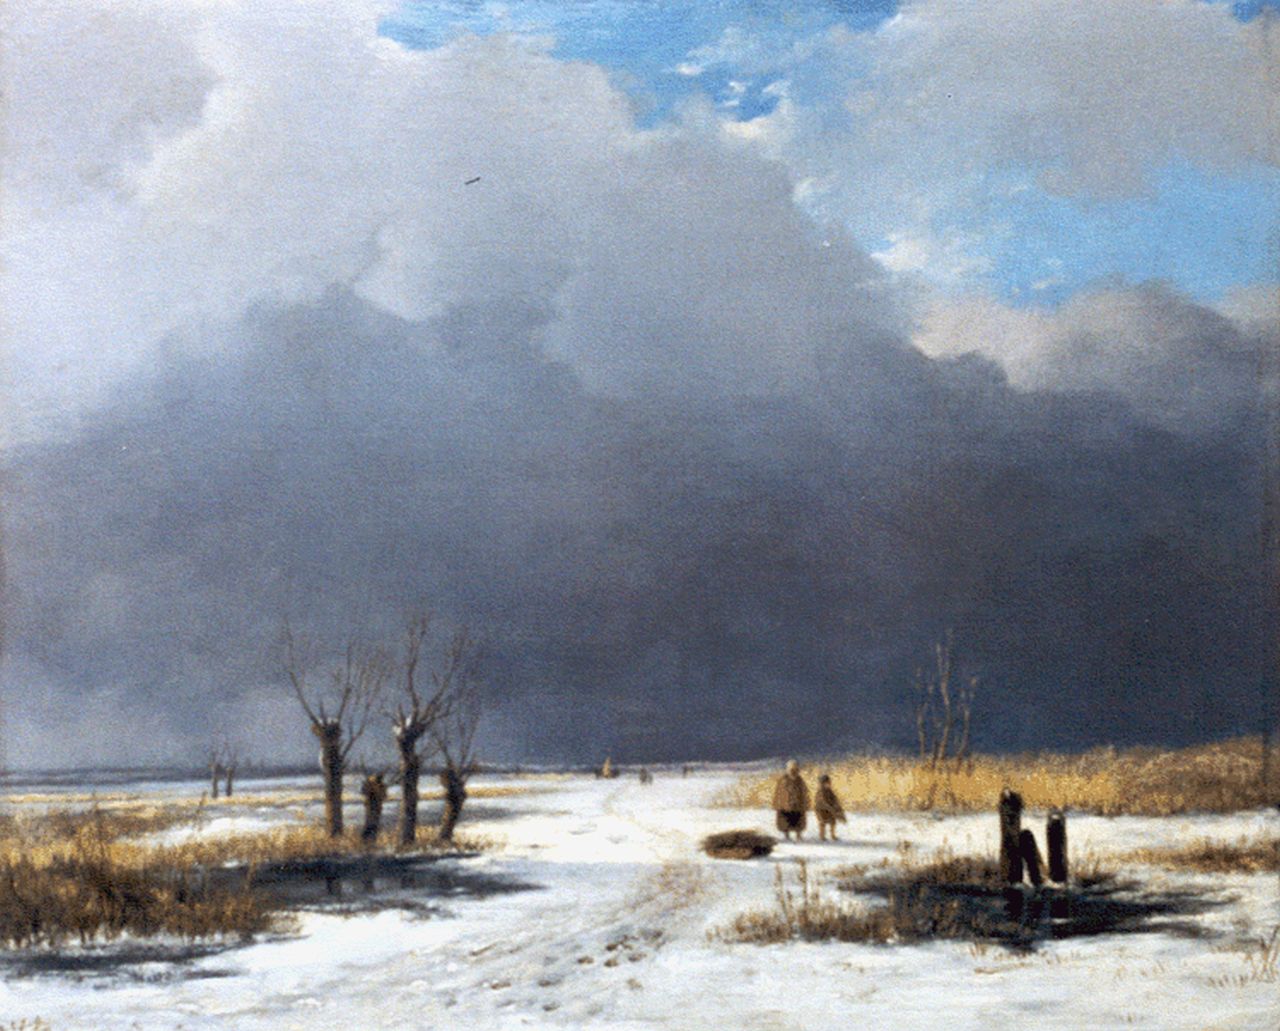 Schneiders van Greyffenswerth B.C.  | Bonifacius Cornelis Schneiders van Greyffenswerth, Winterlandschap met figuren, olieverf op paneel 26,3 x 31,8 cm, gesigneerd linksonder ini en gedateerd 1834